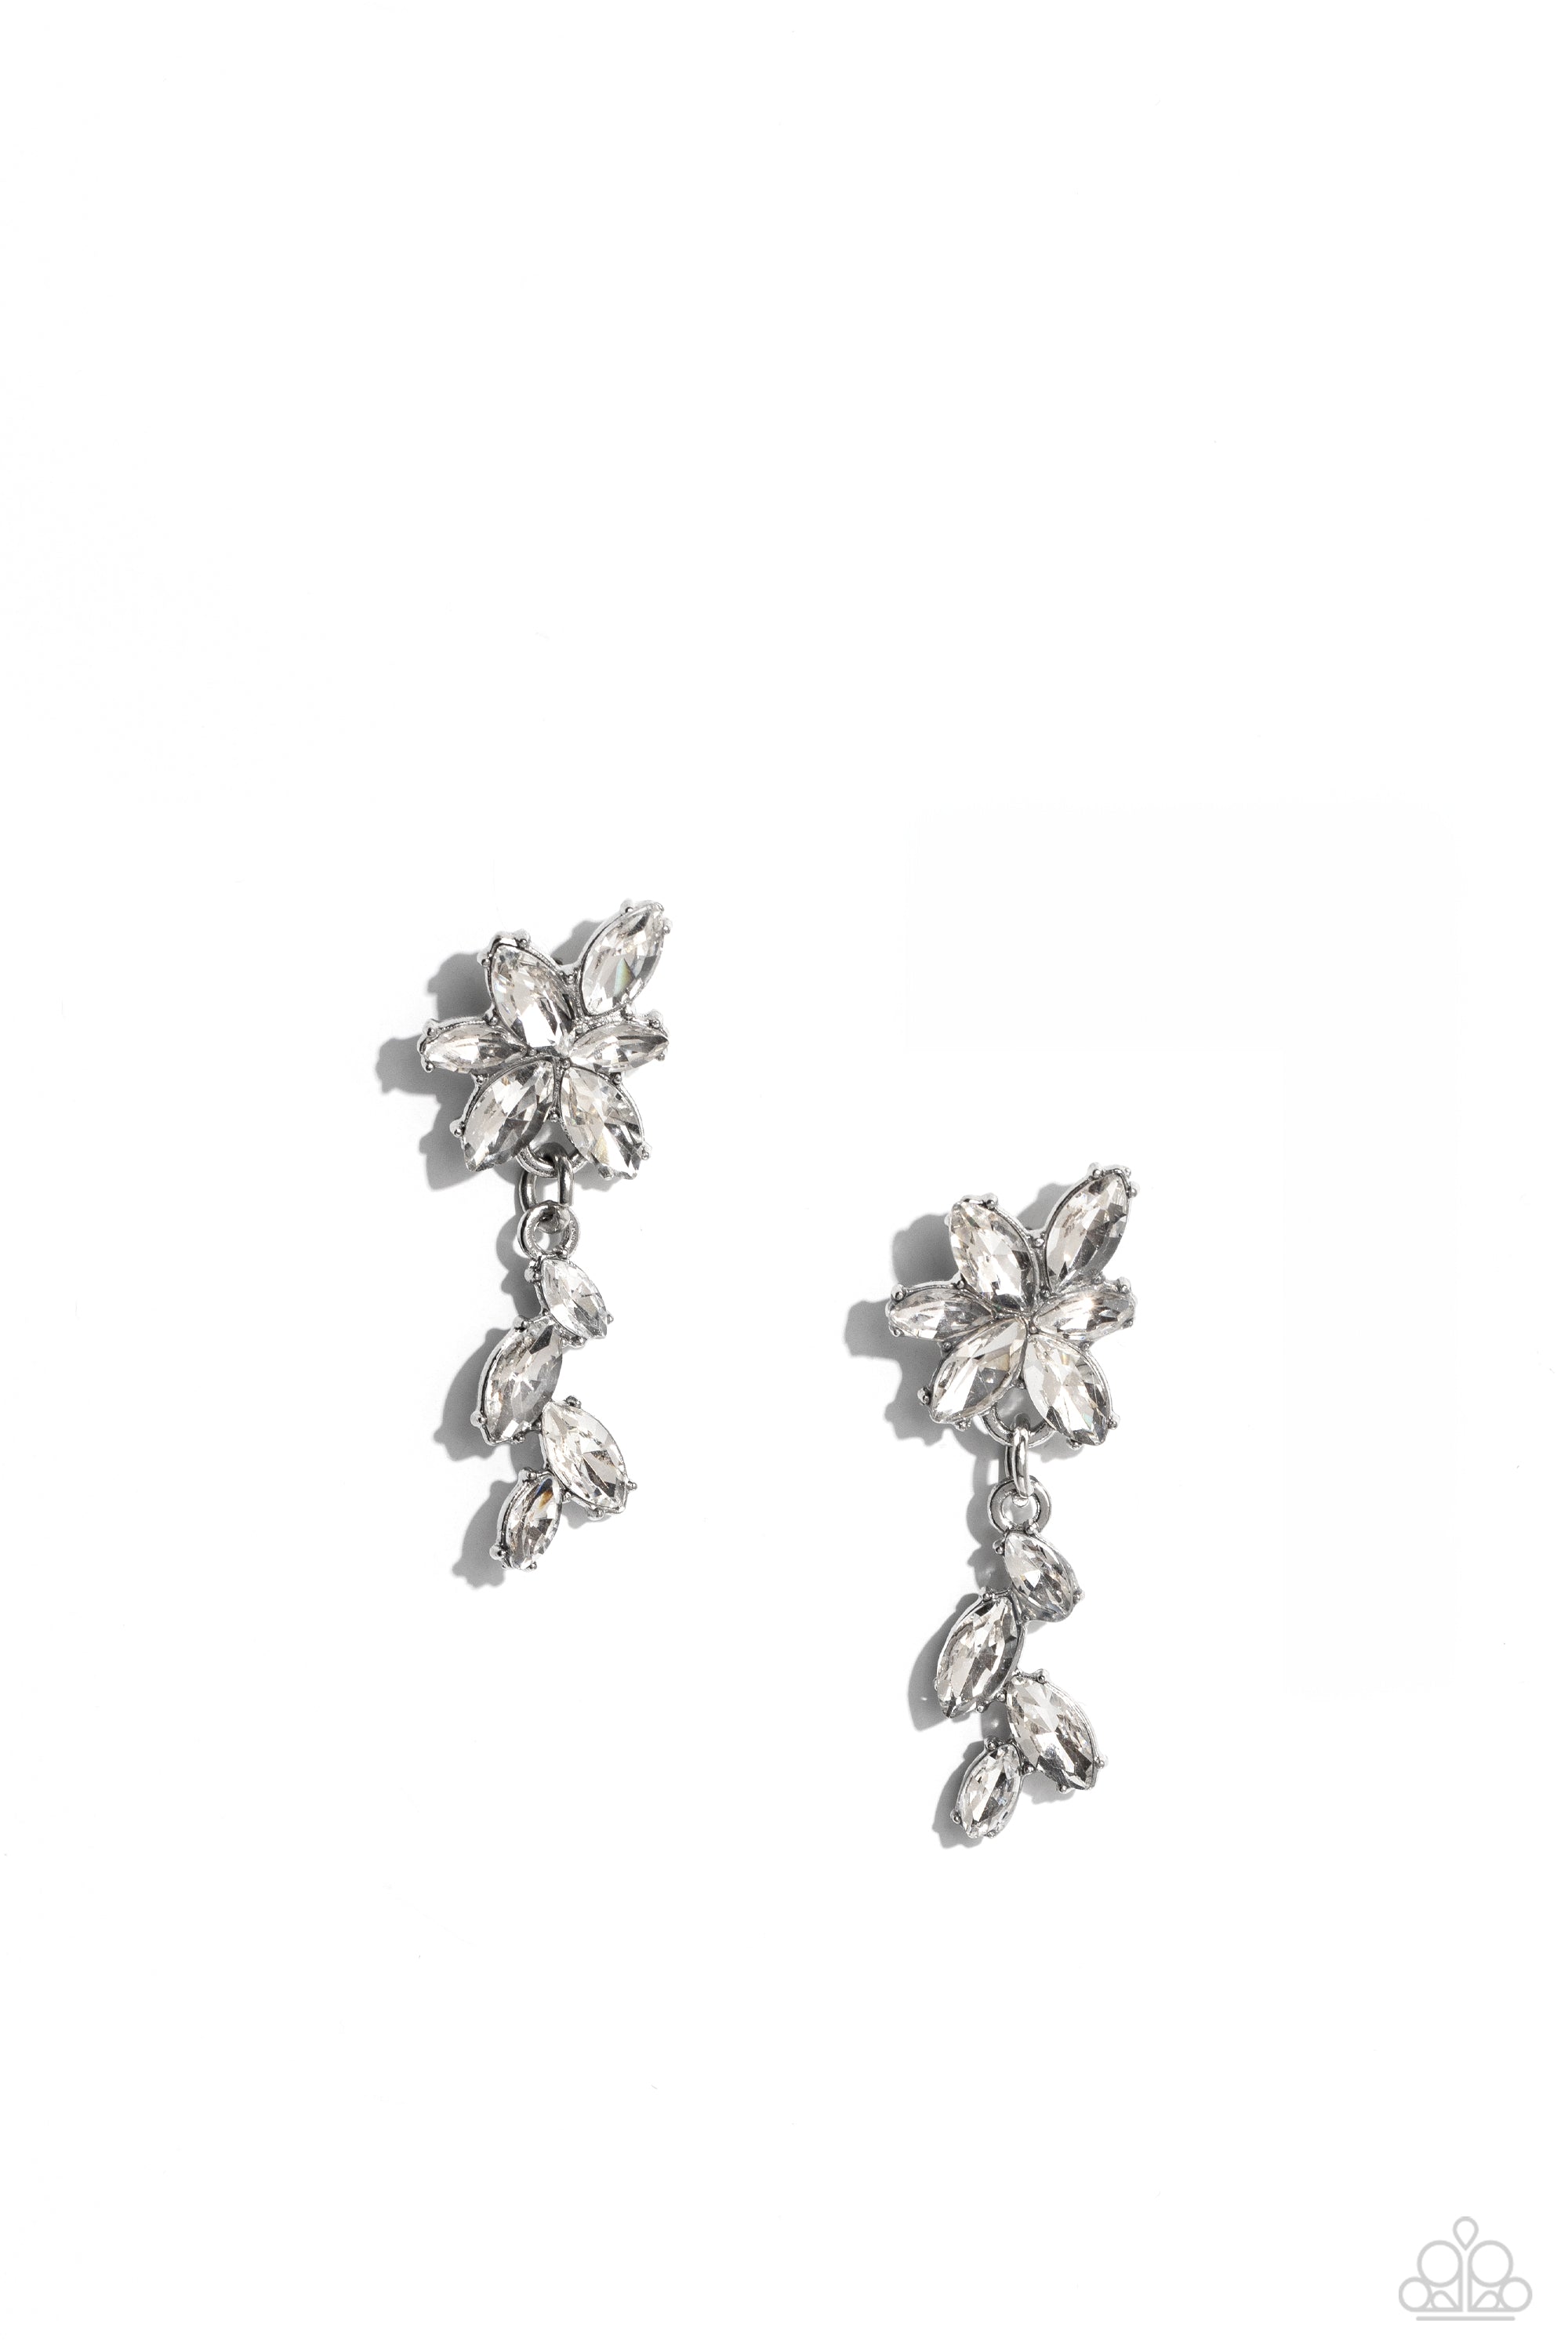 Goddess Grove White Rhinestone Earrings - Paparazzi Accessories- lightbox - CarasShop.com - $5 Jewelry by Cara Jewels